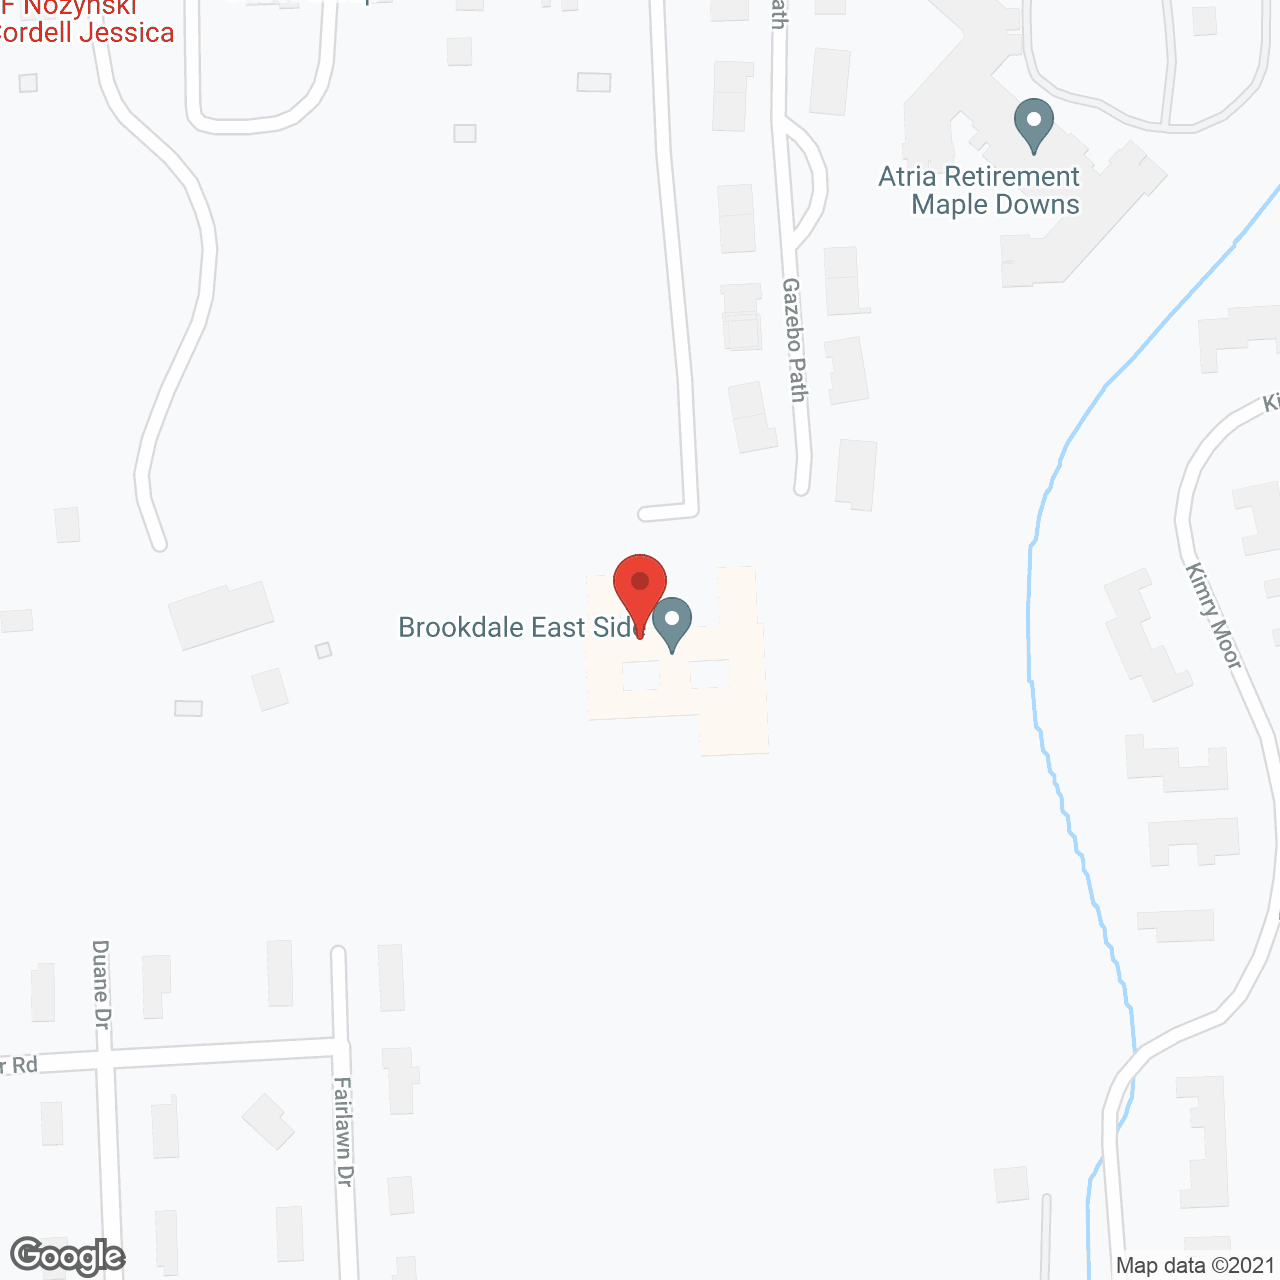 Brookdale East Side in google map